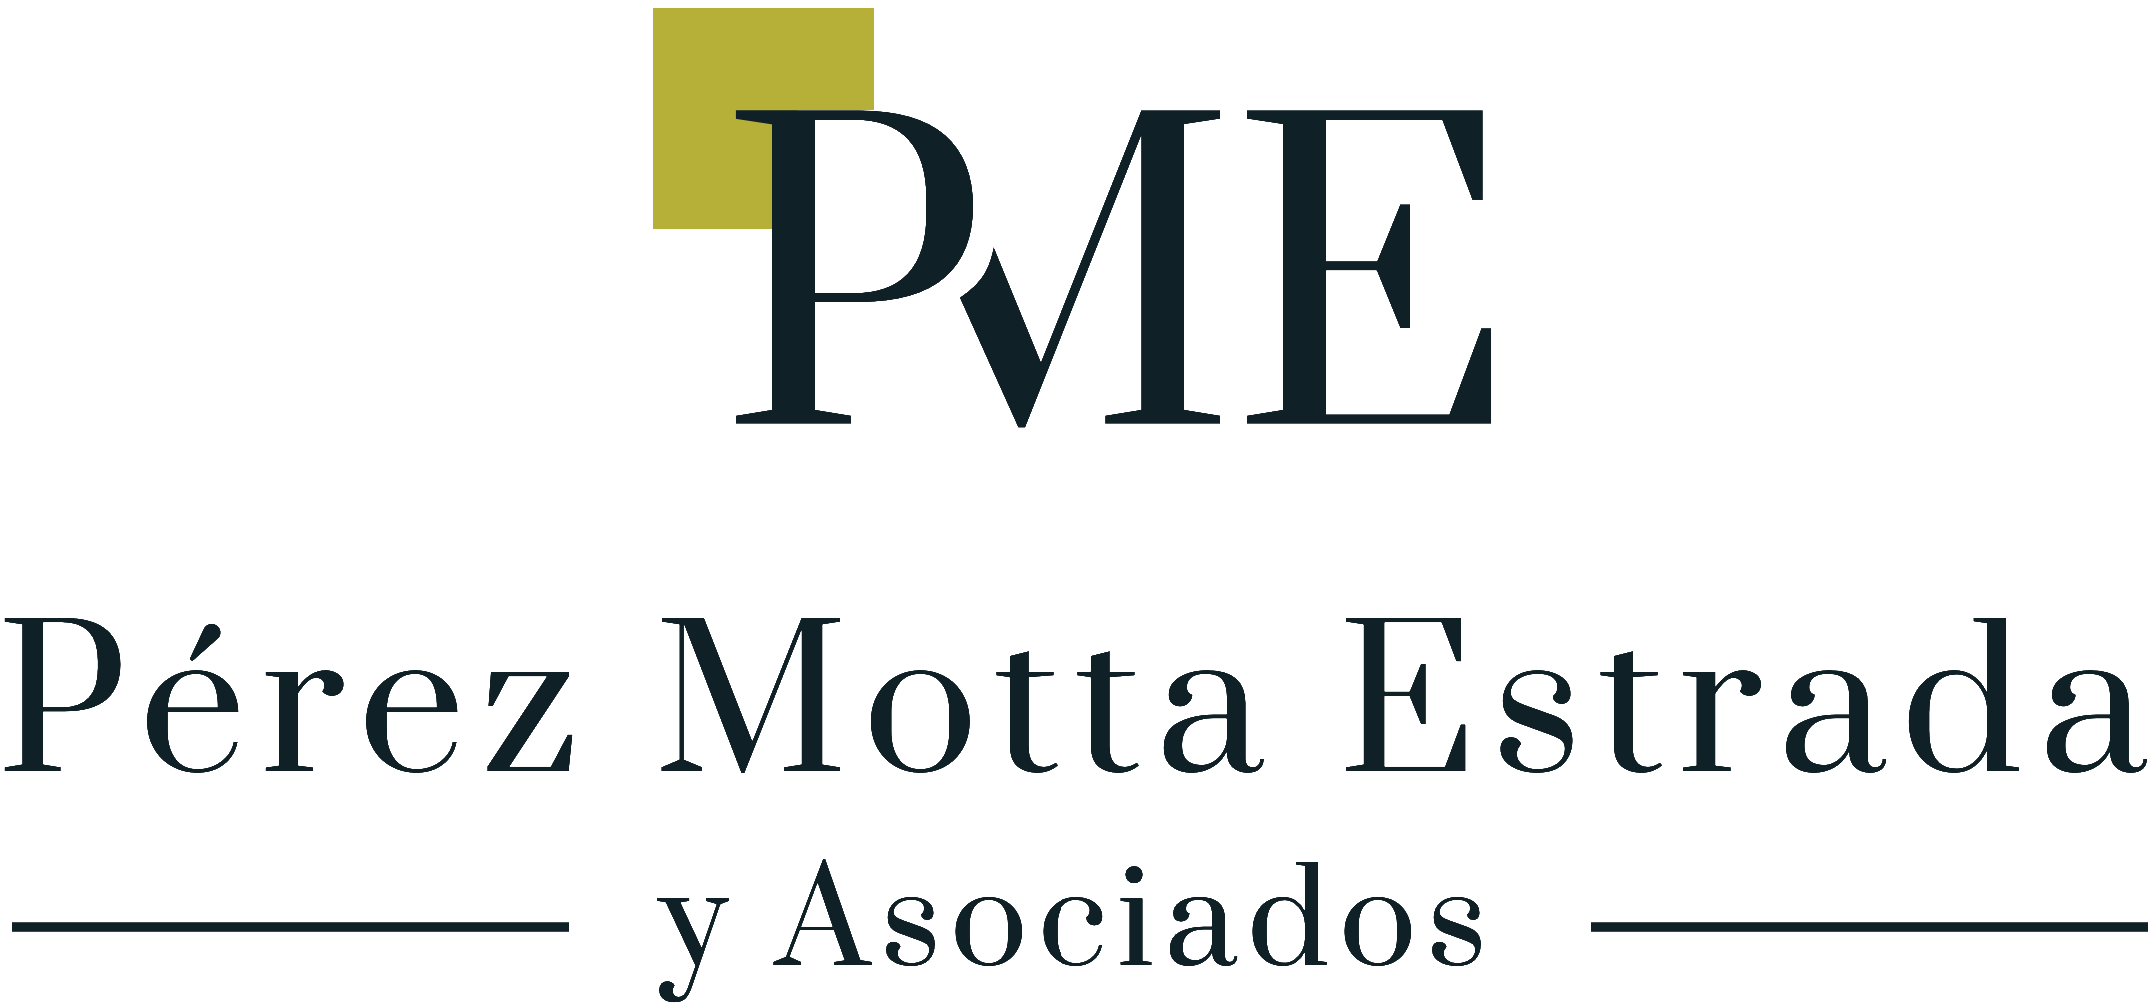 Pérez Motta Estrada y Asociados